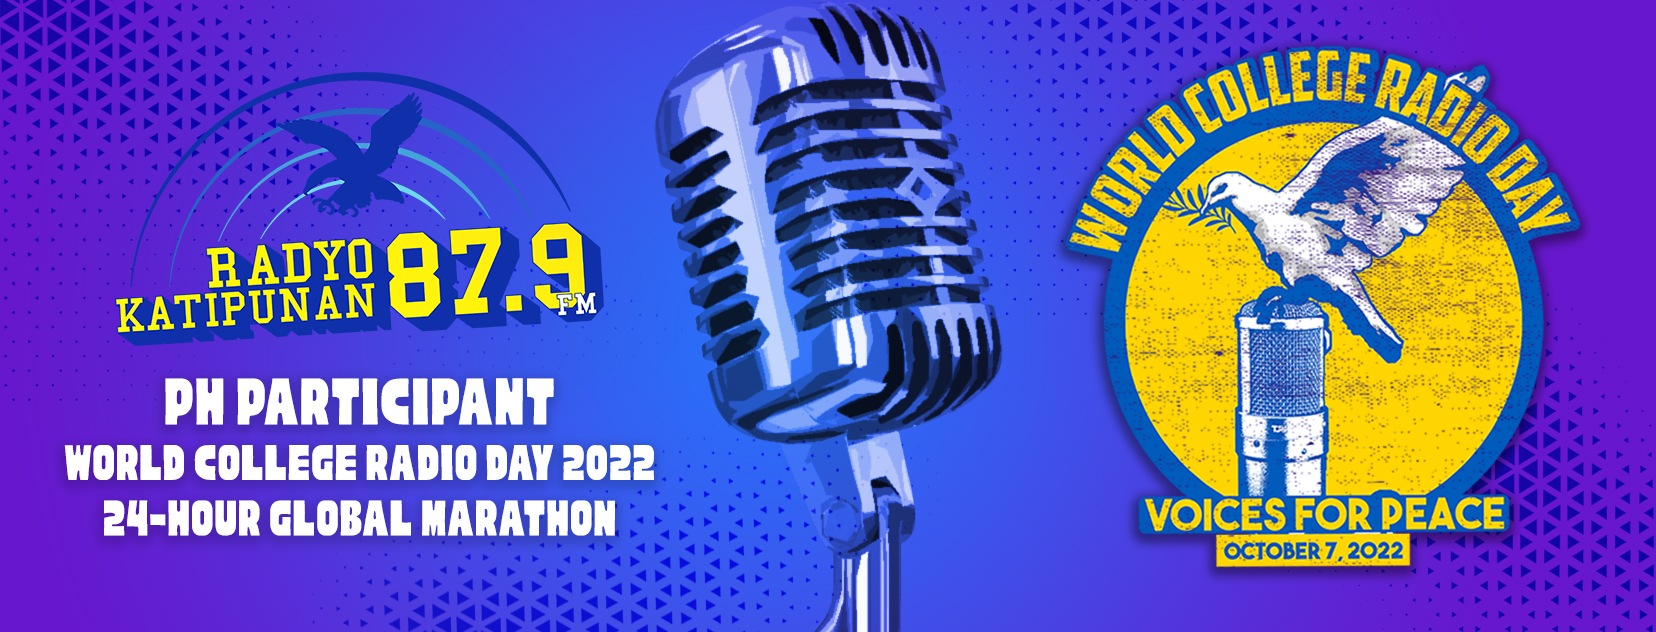 Radyo Katipunan 87.9 FM Join World College Radio Day for the Fourth Time